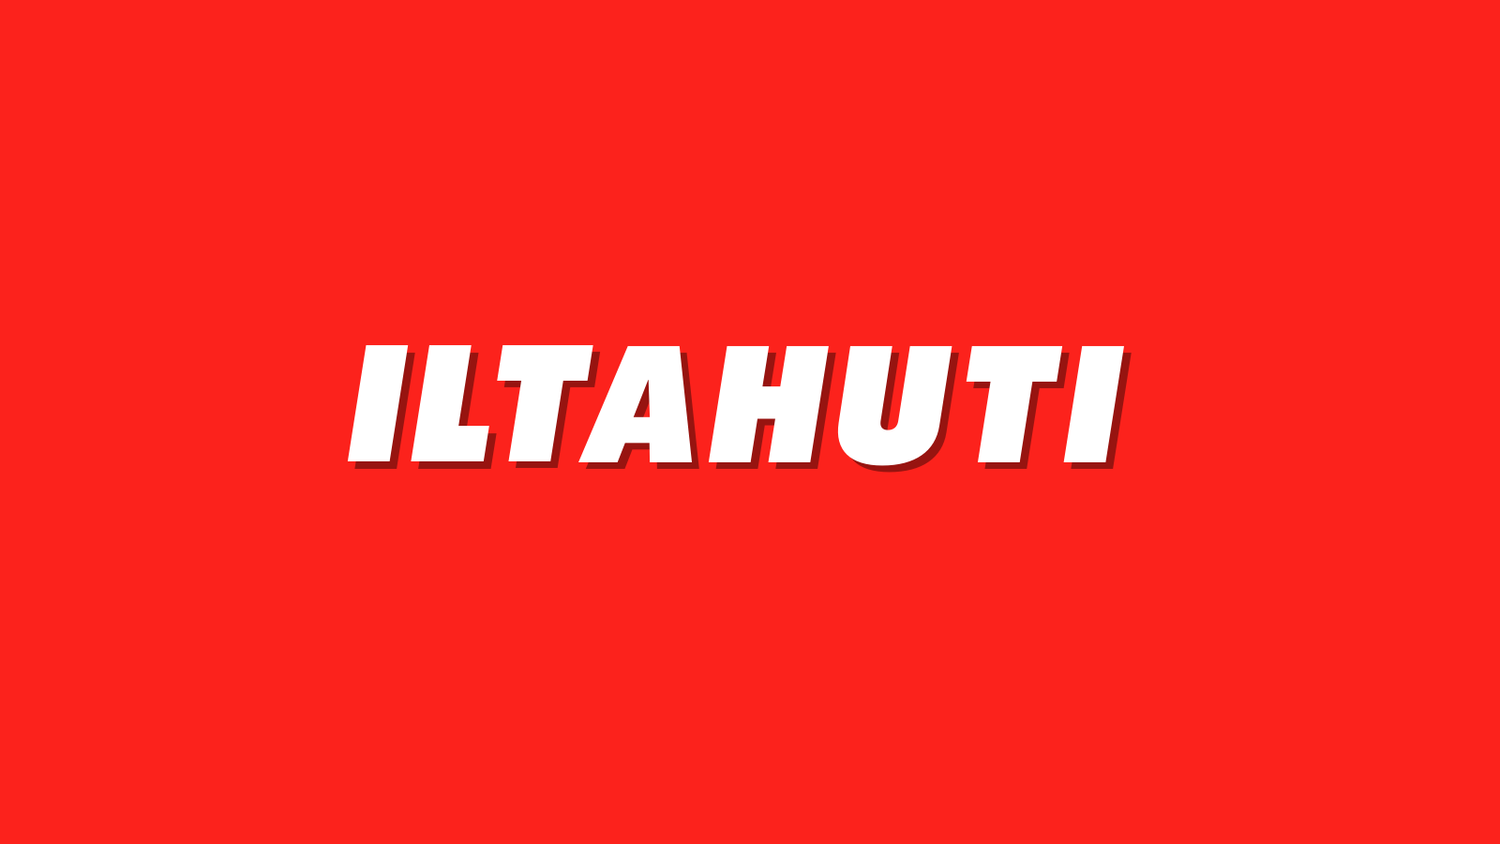 www.iltahuti.com